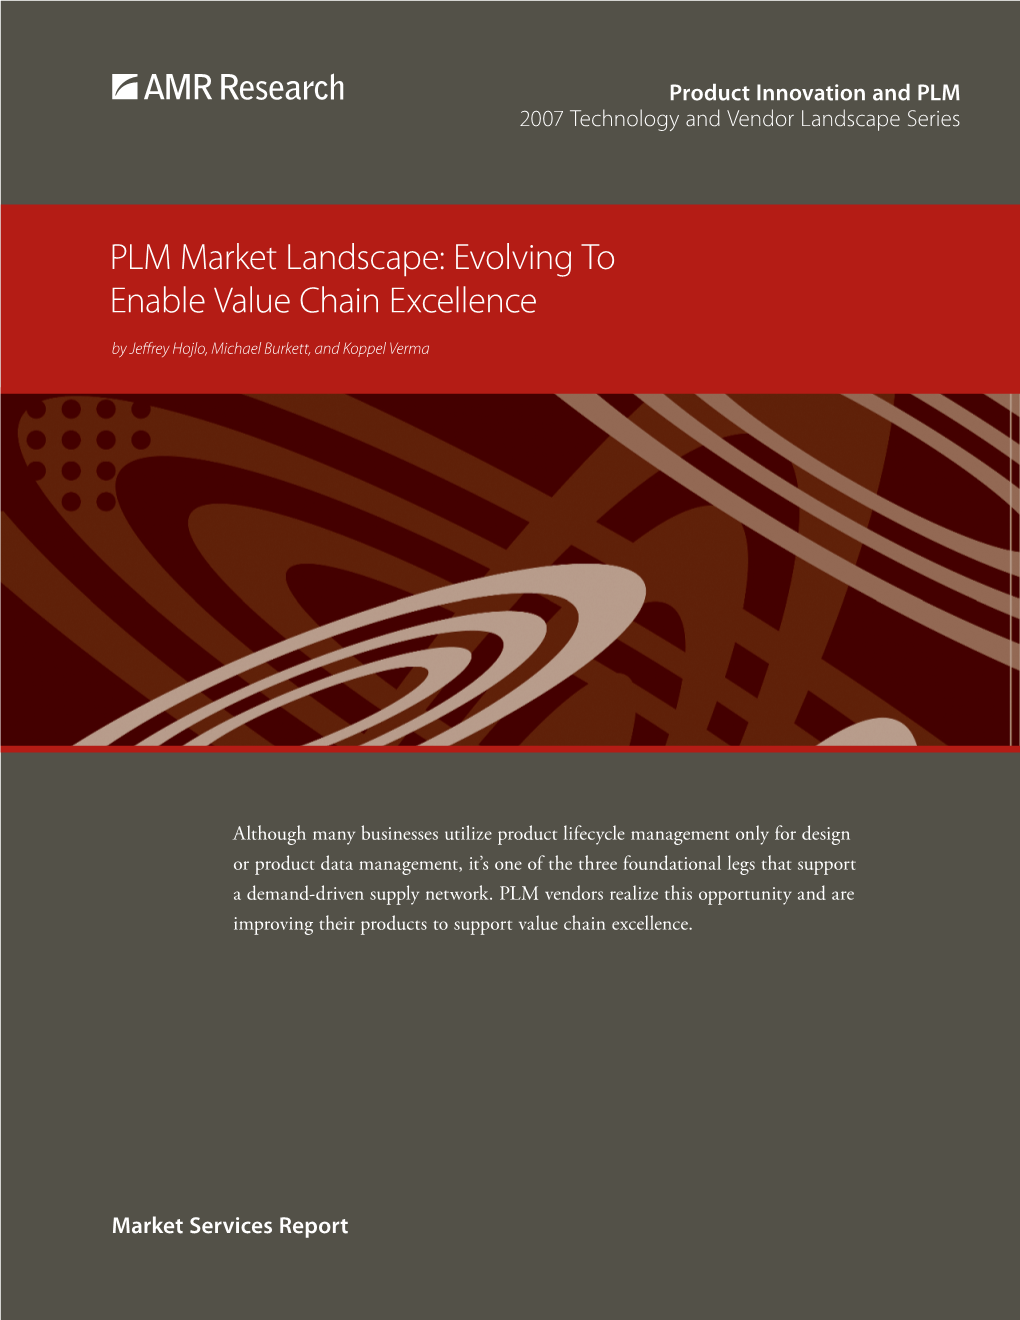 PLM Market Landscape: Evolving to Enable Value Chain Excellence